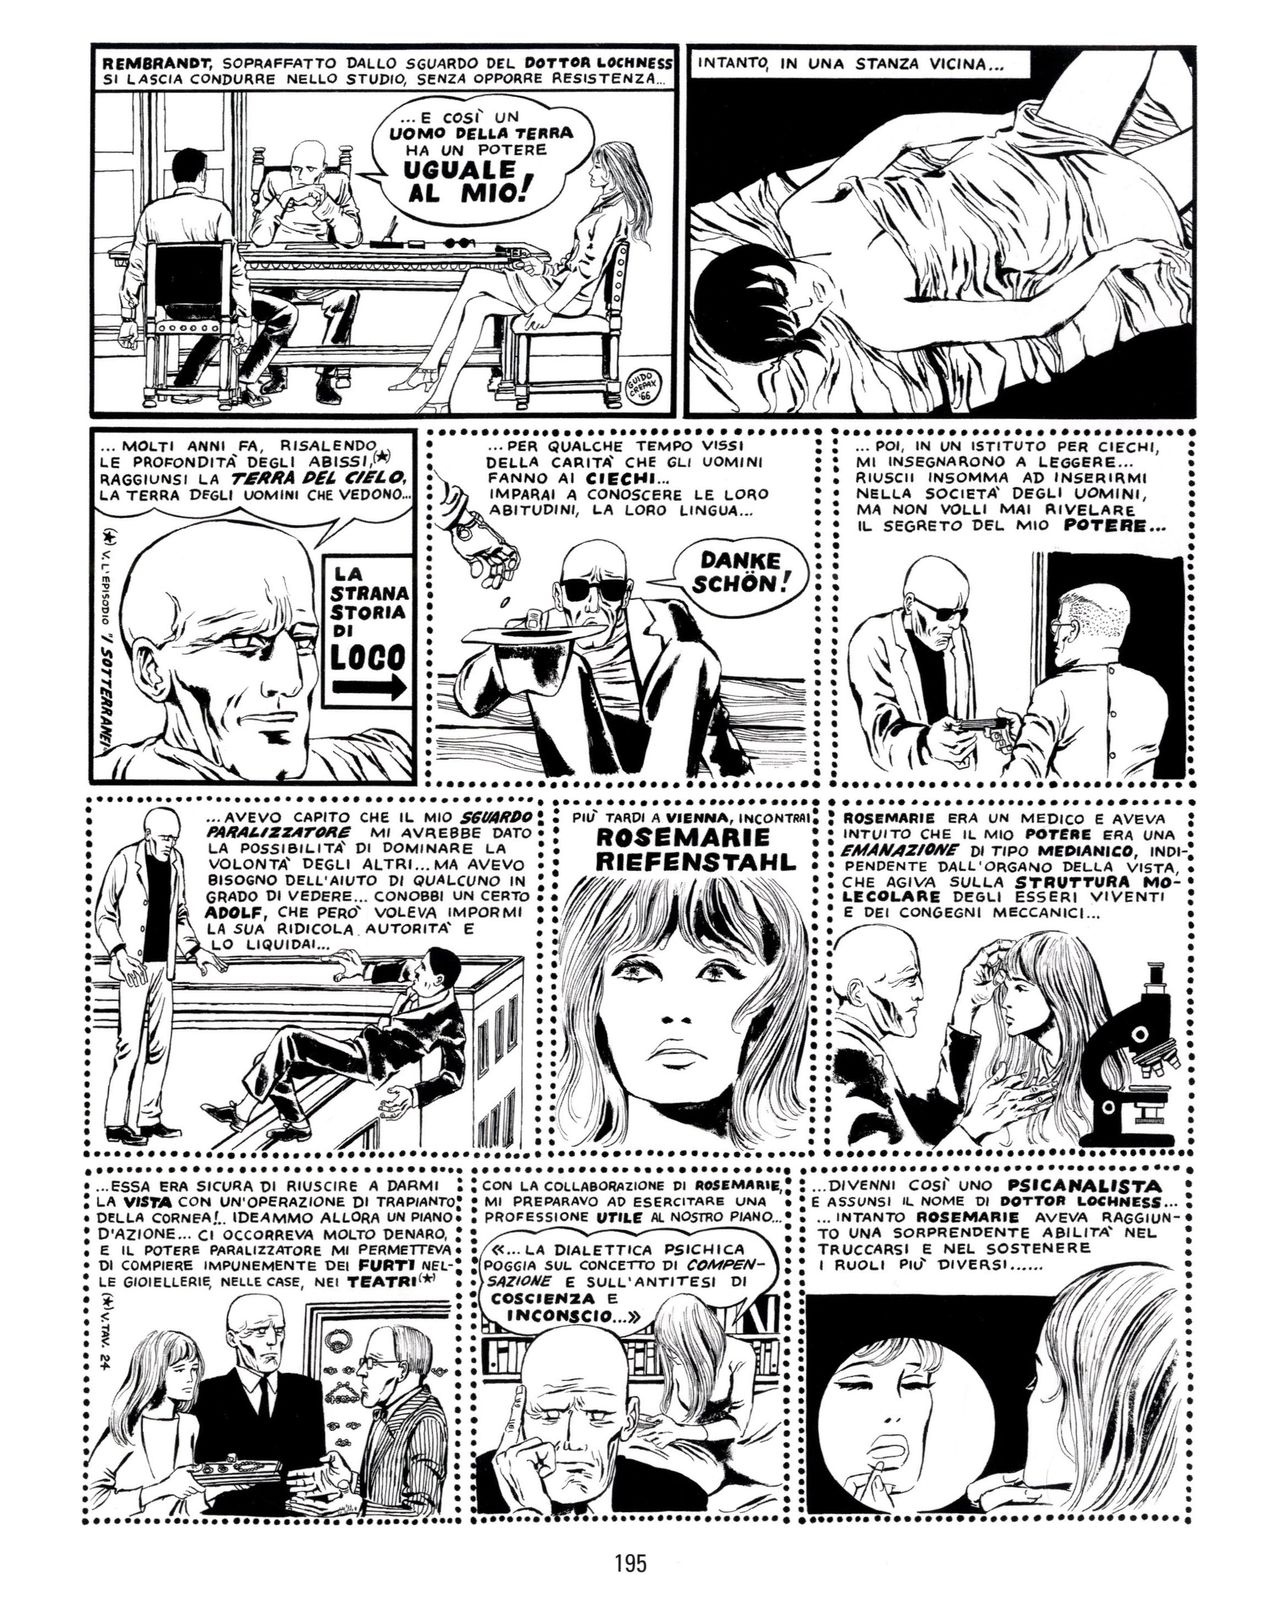 [Guido Crepax] Erotica Fumetti #25 : L'ascesa dei sotterranei : I cavalieri ciechi [Italian] 196